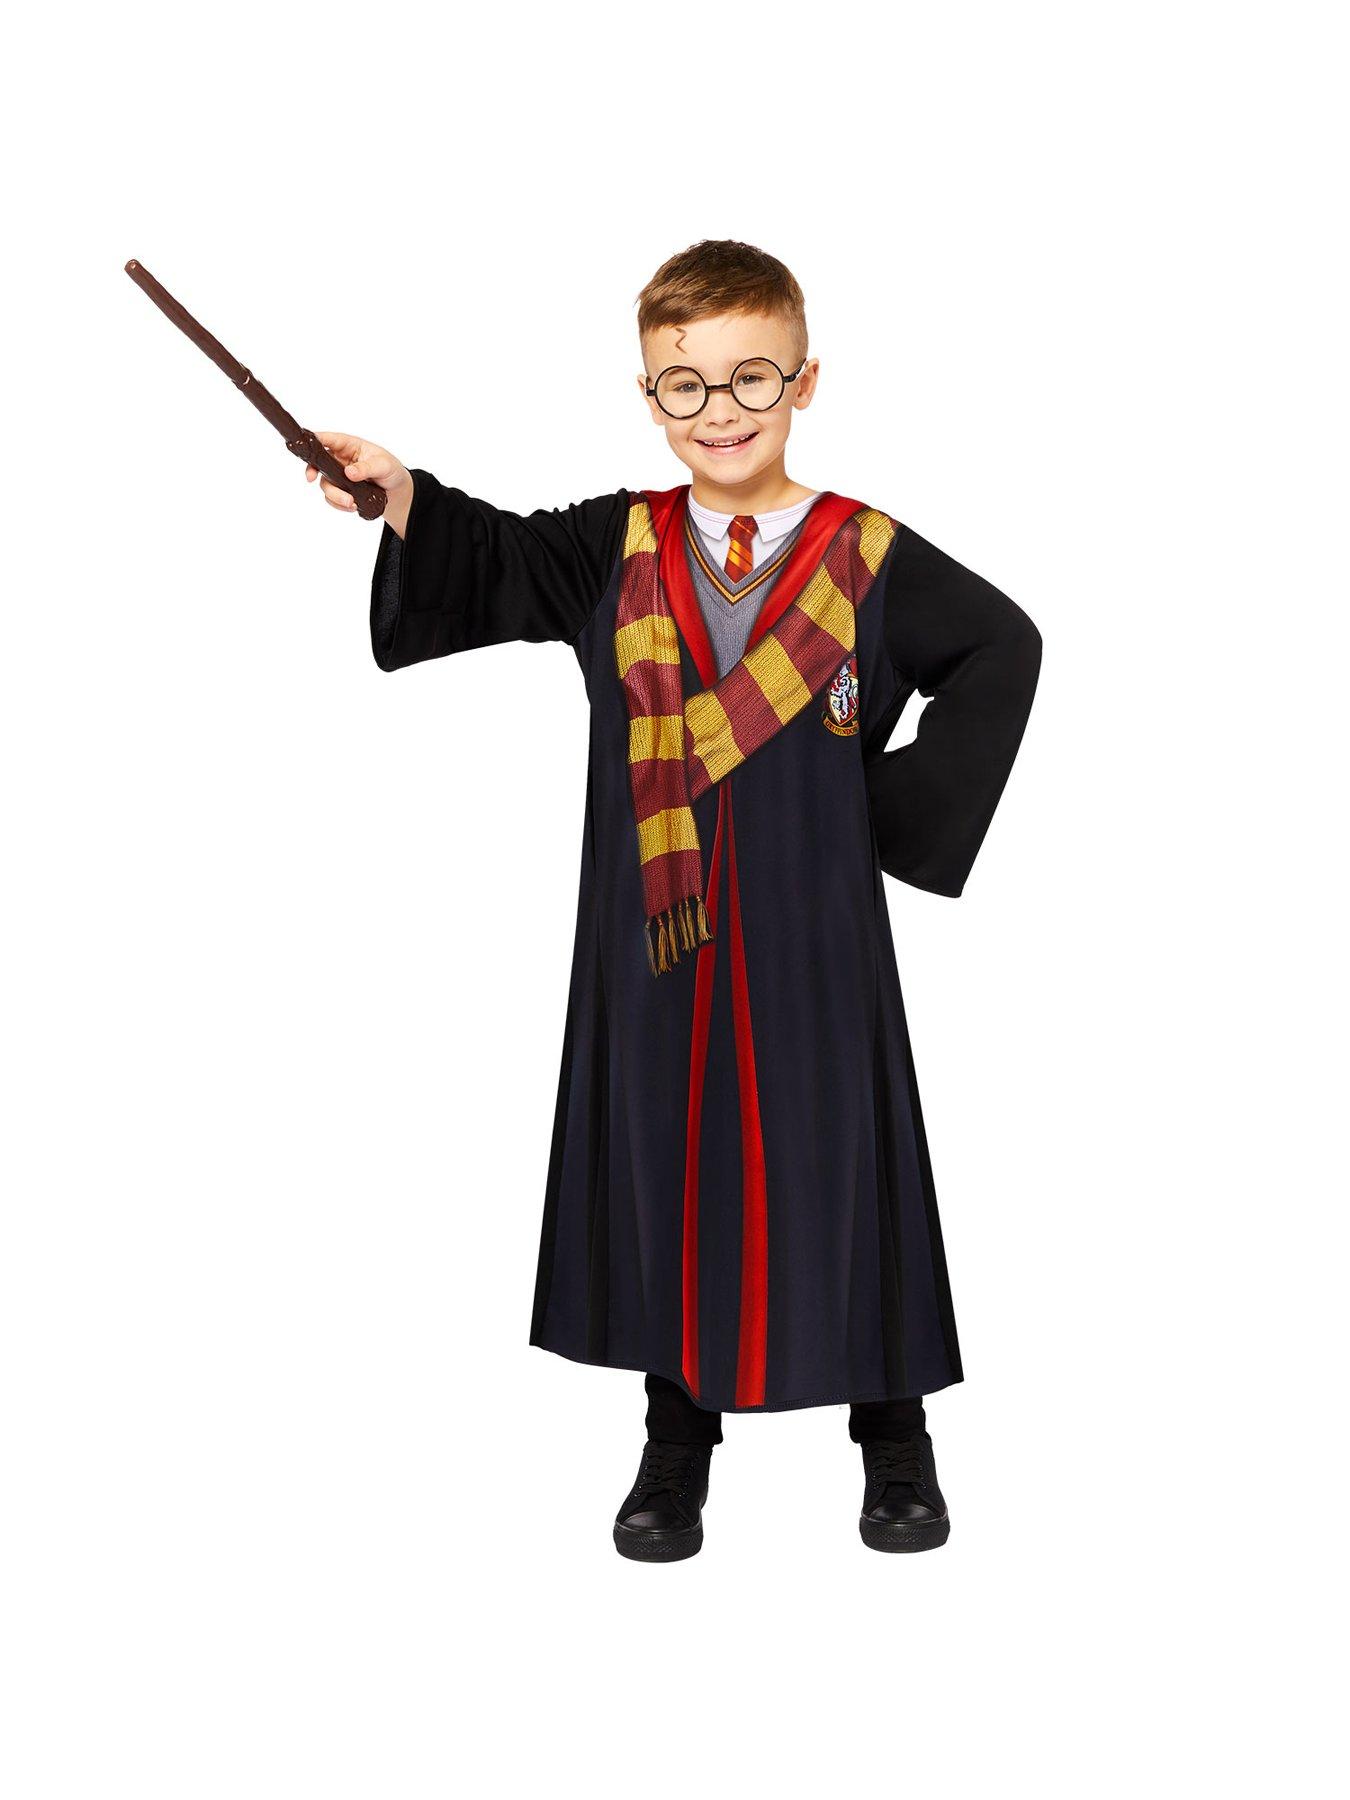 Harry Potter Costume Kids Size OFFICIAL MERCHANDISE WIZARDING